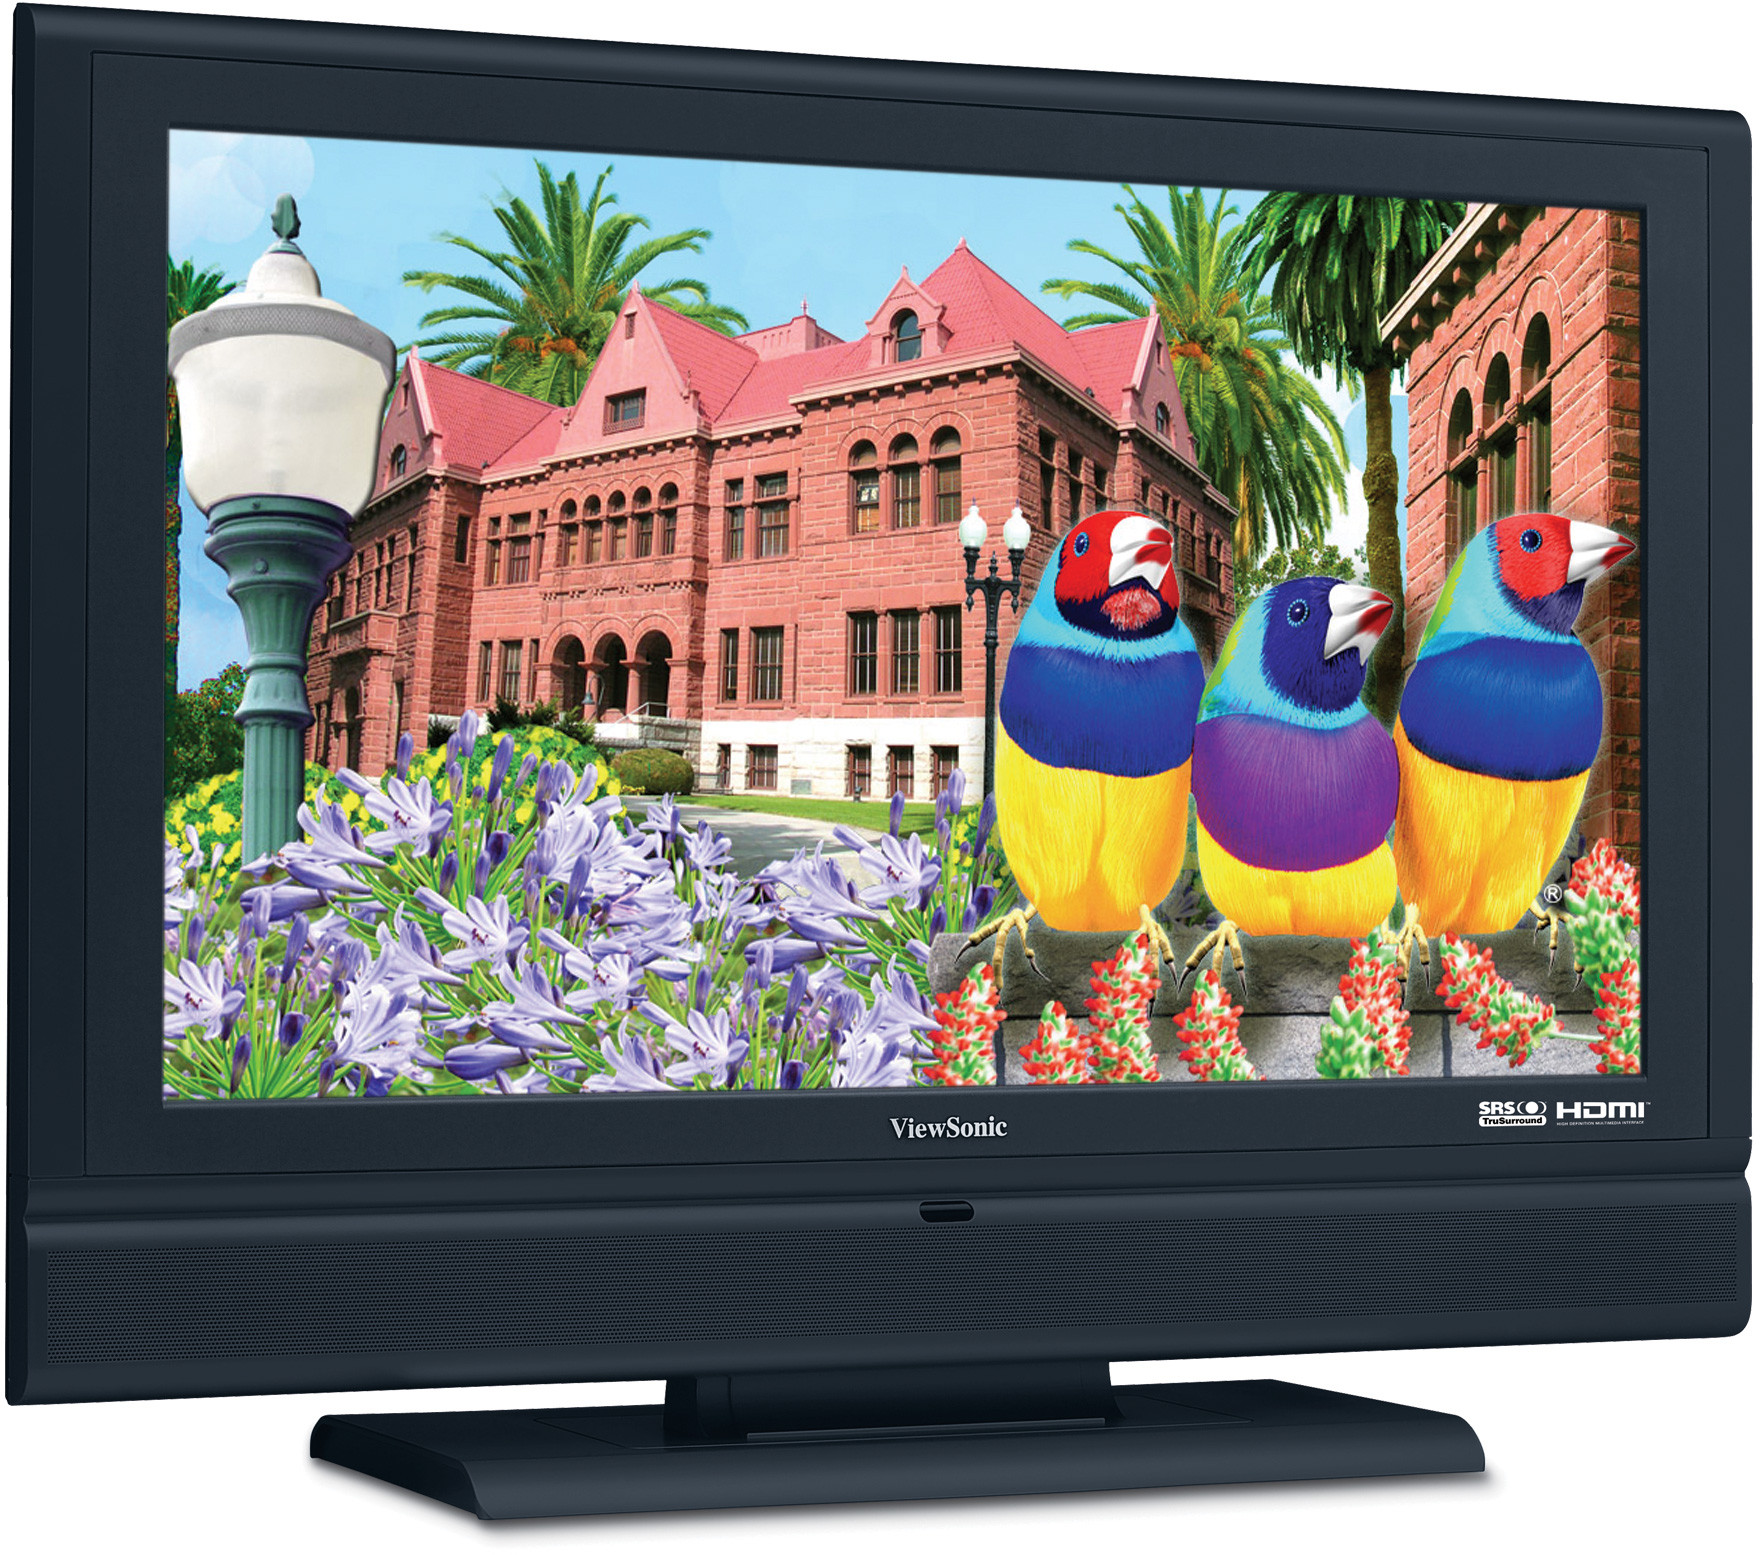 Herformuleren Penetratie Circus ViewSonic N3760w 37” WIDESCREEN HIGH DEFINITION LCD TV